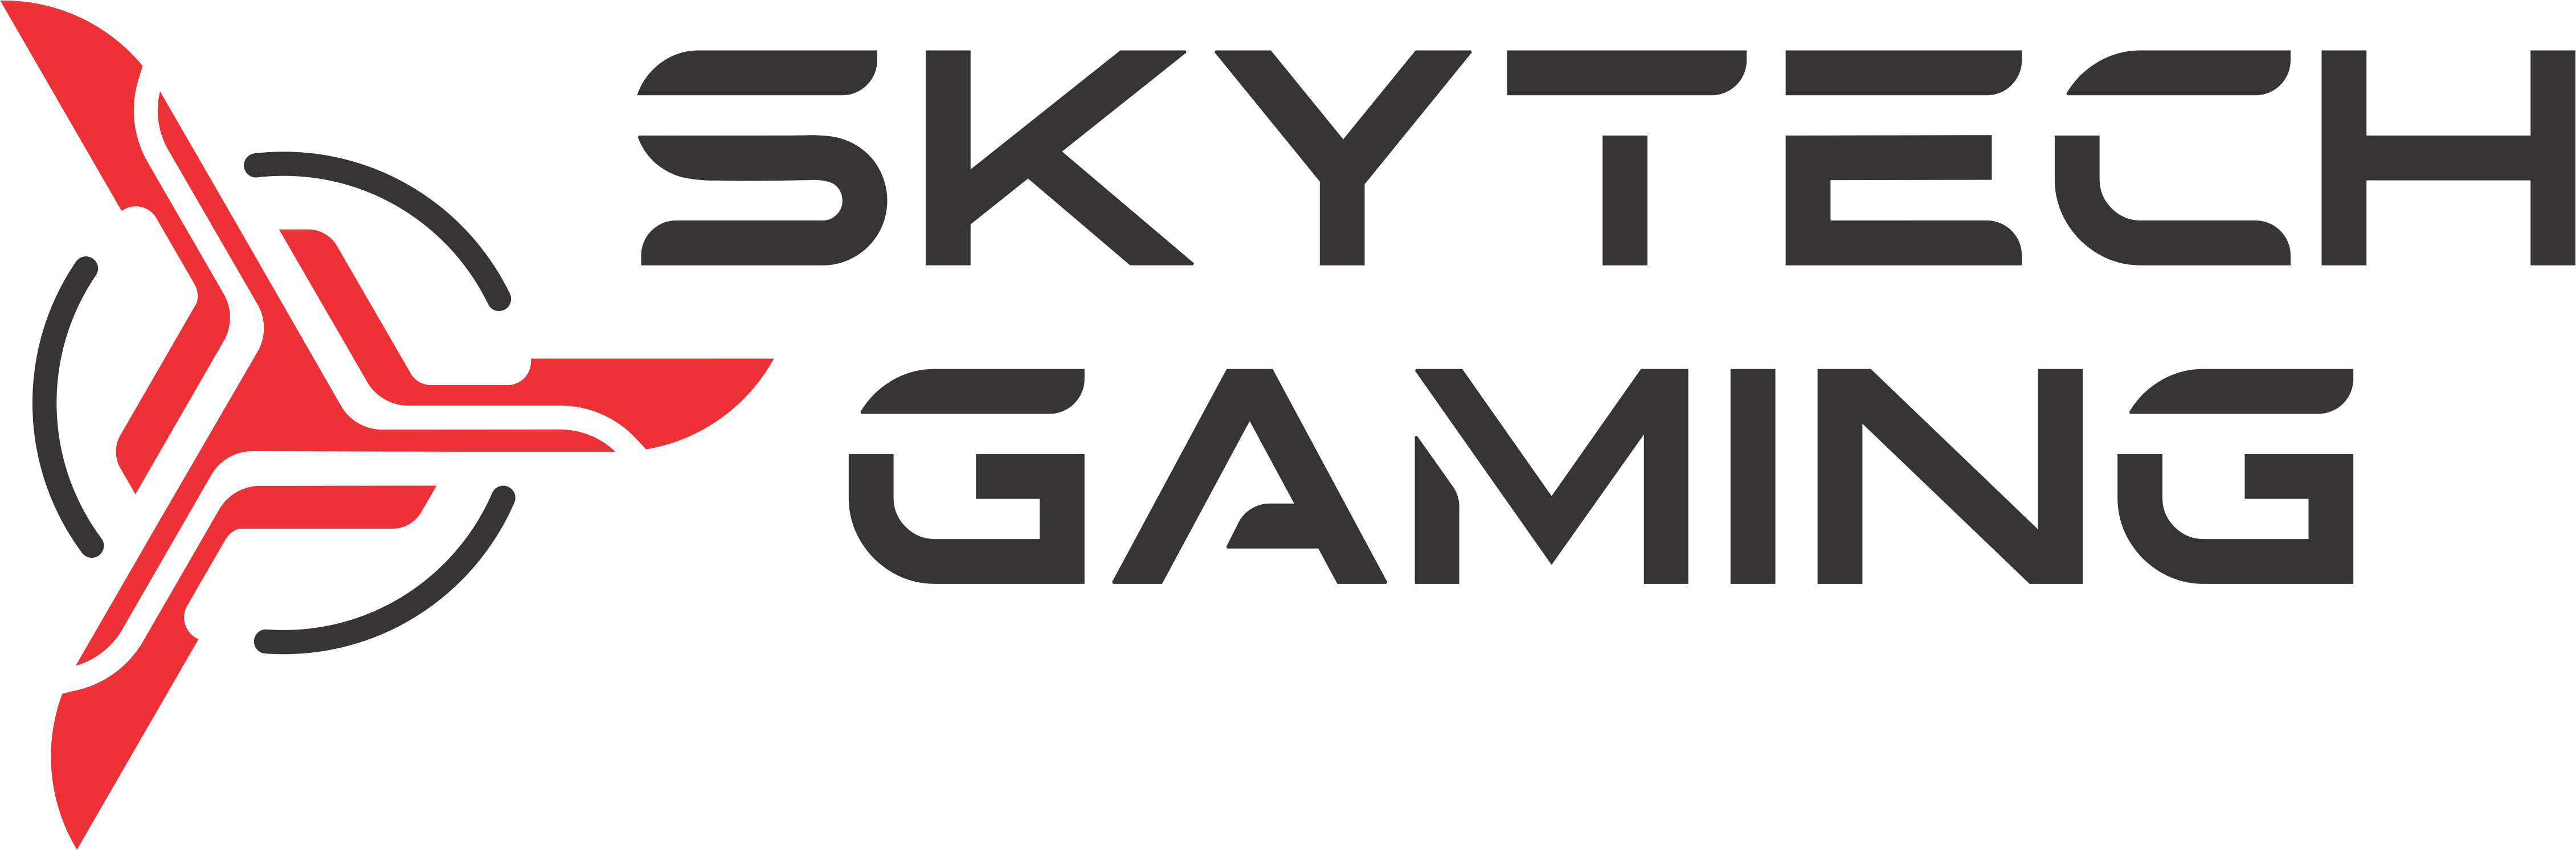 Skytech Gaming Coupons & Promo Codes